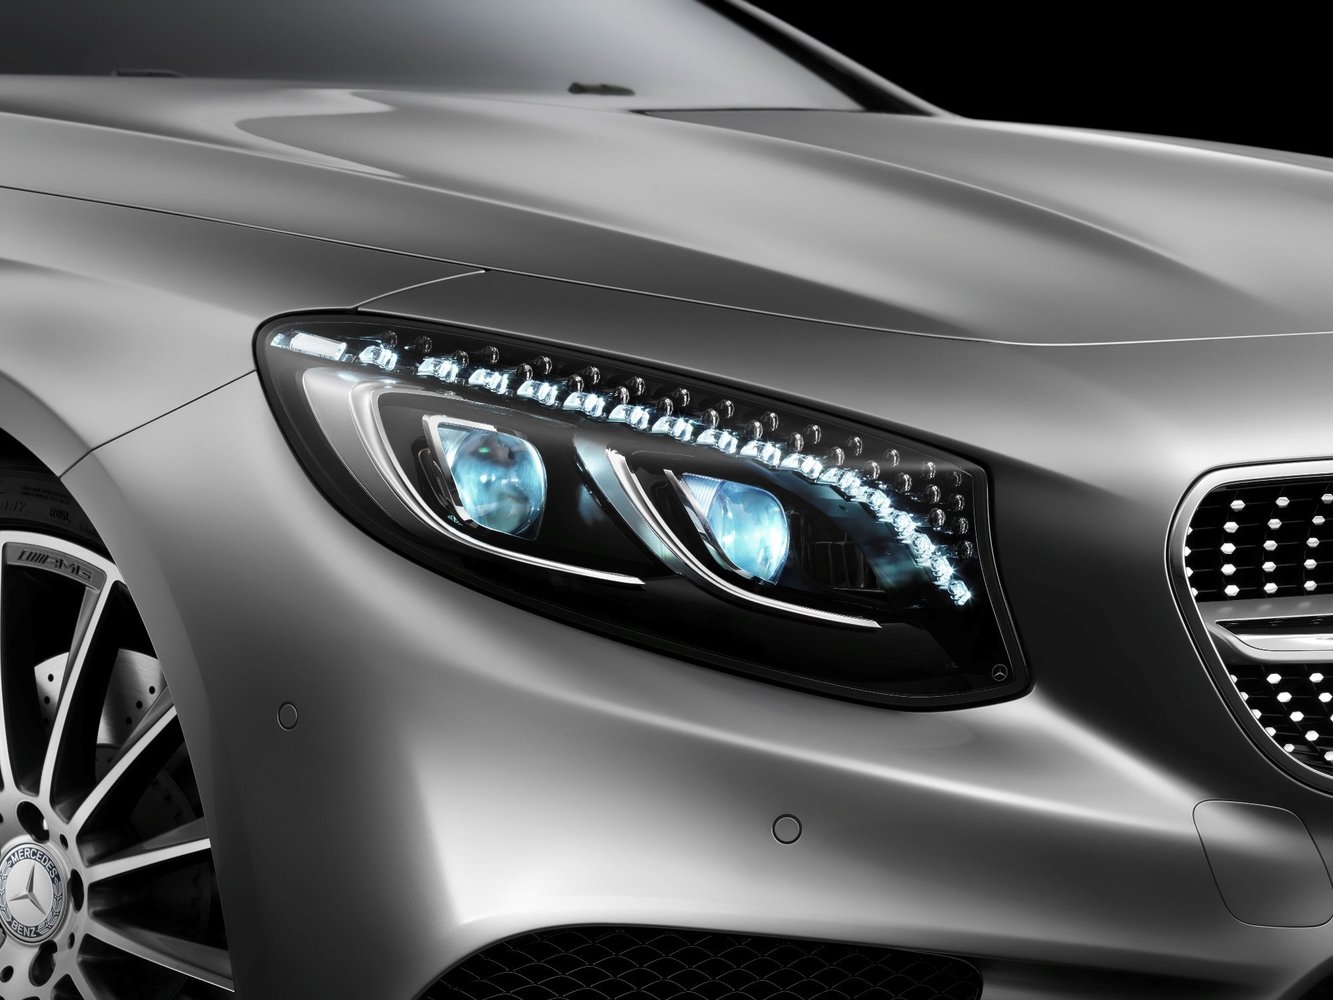 купе Mercedes-Benz S-klasse 2013 - 2016г выпуска модификация 4.7 AT (455 л.с.)